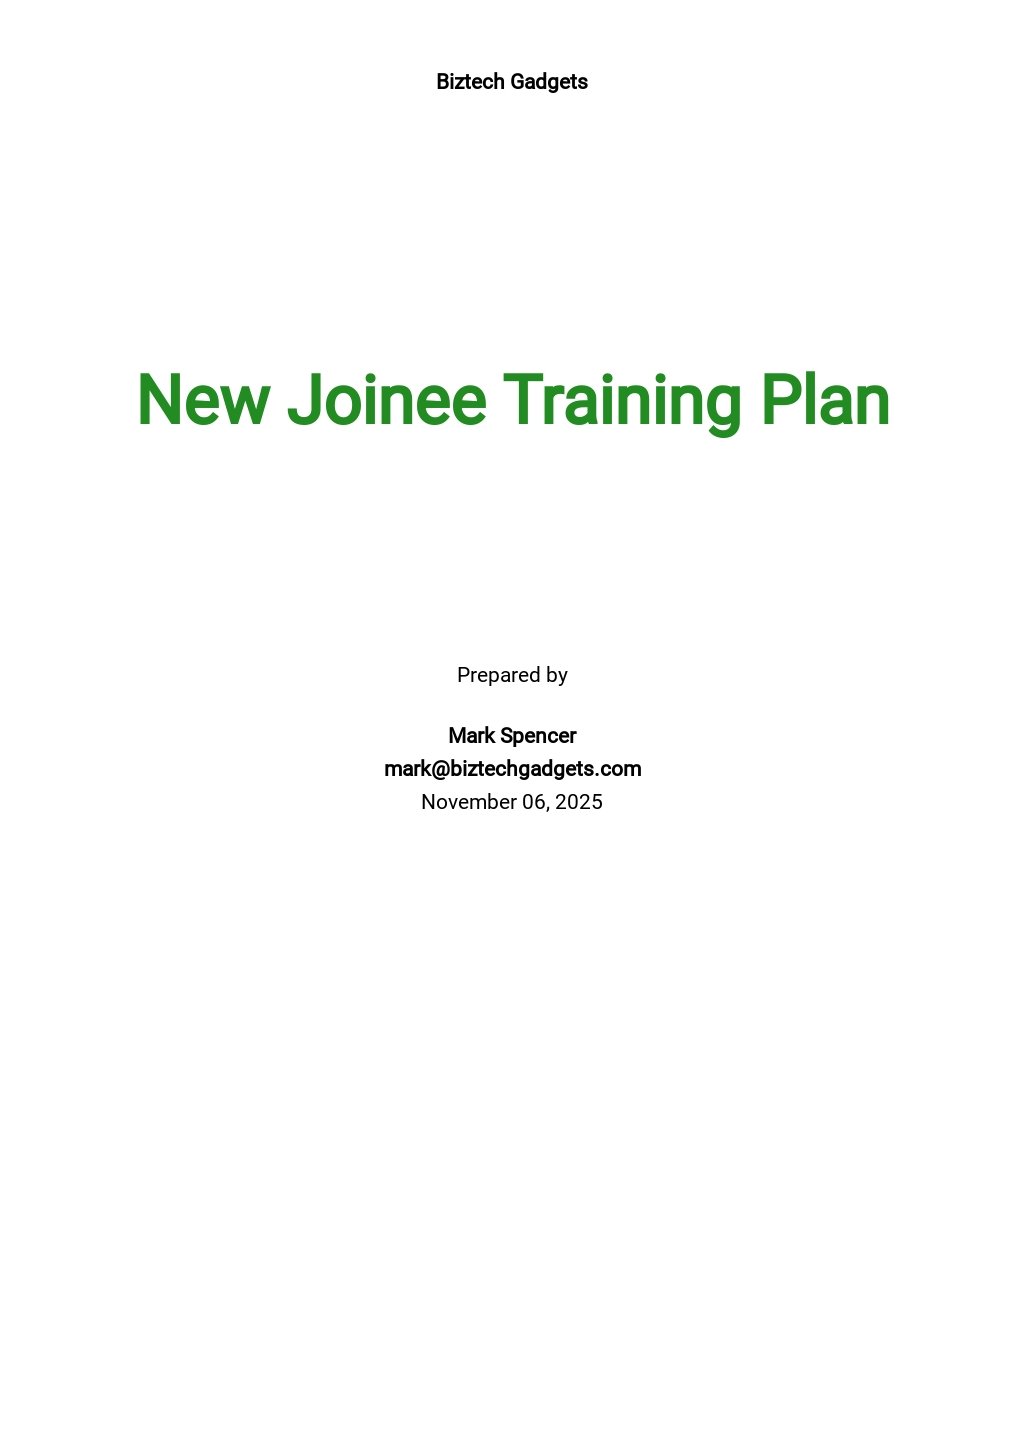 New Joinee Training Plan Template.jpe